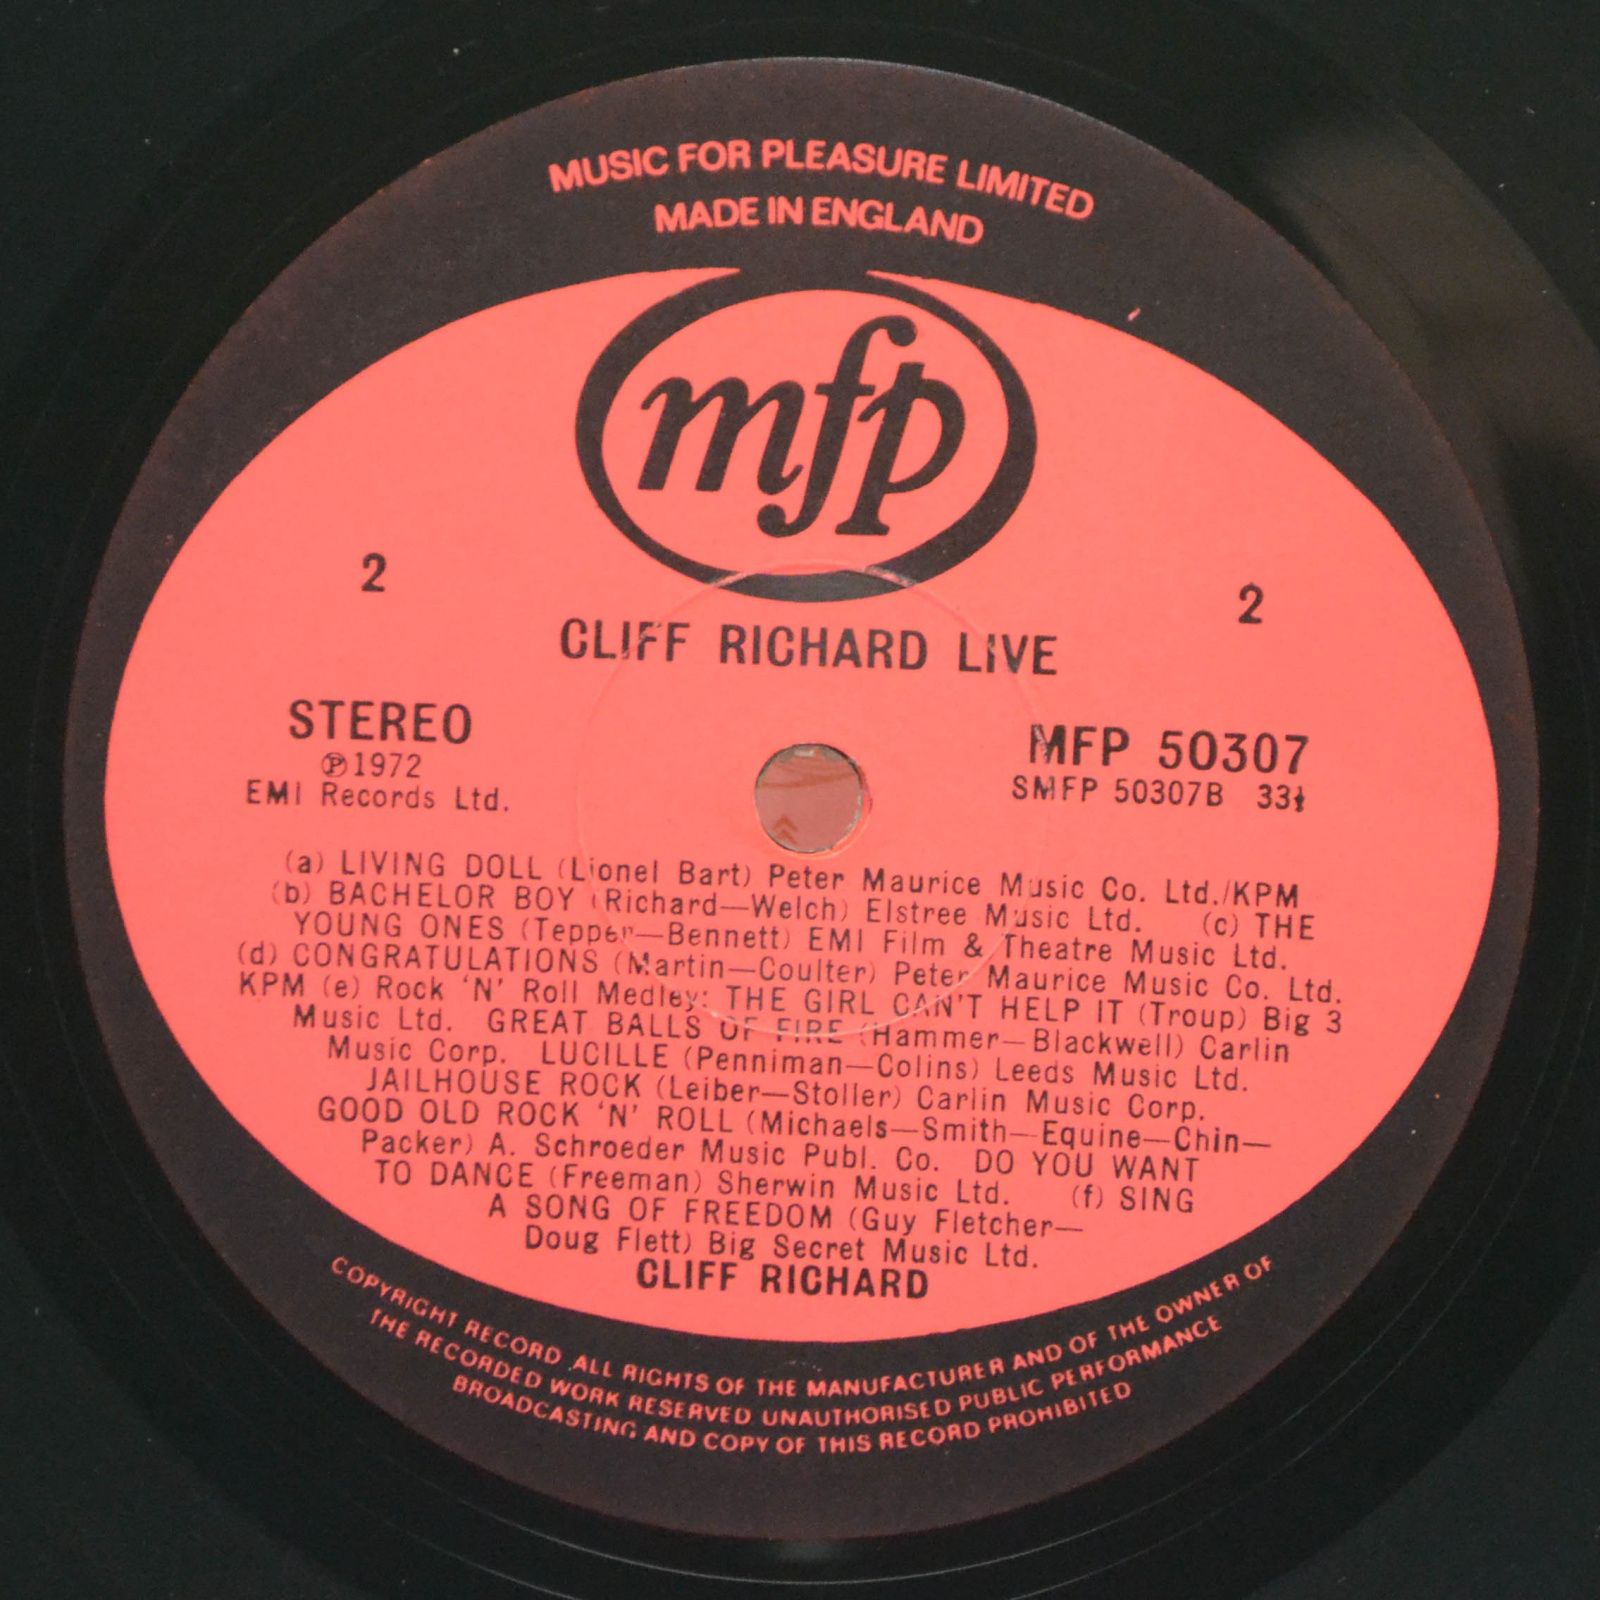 Cliff Richard — Live! (UK), 1976